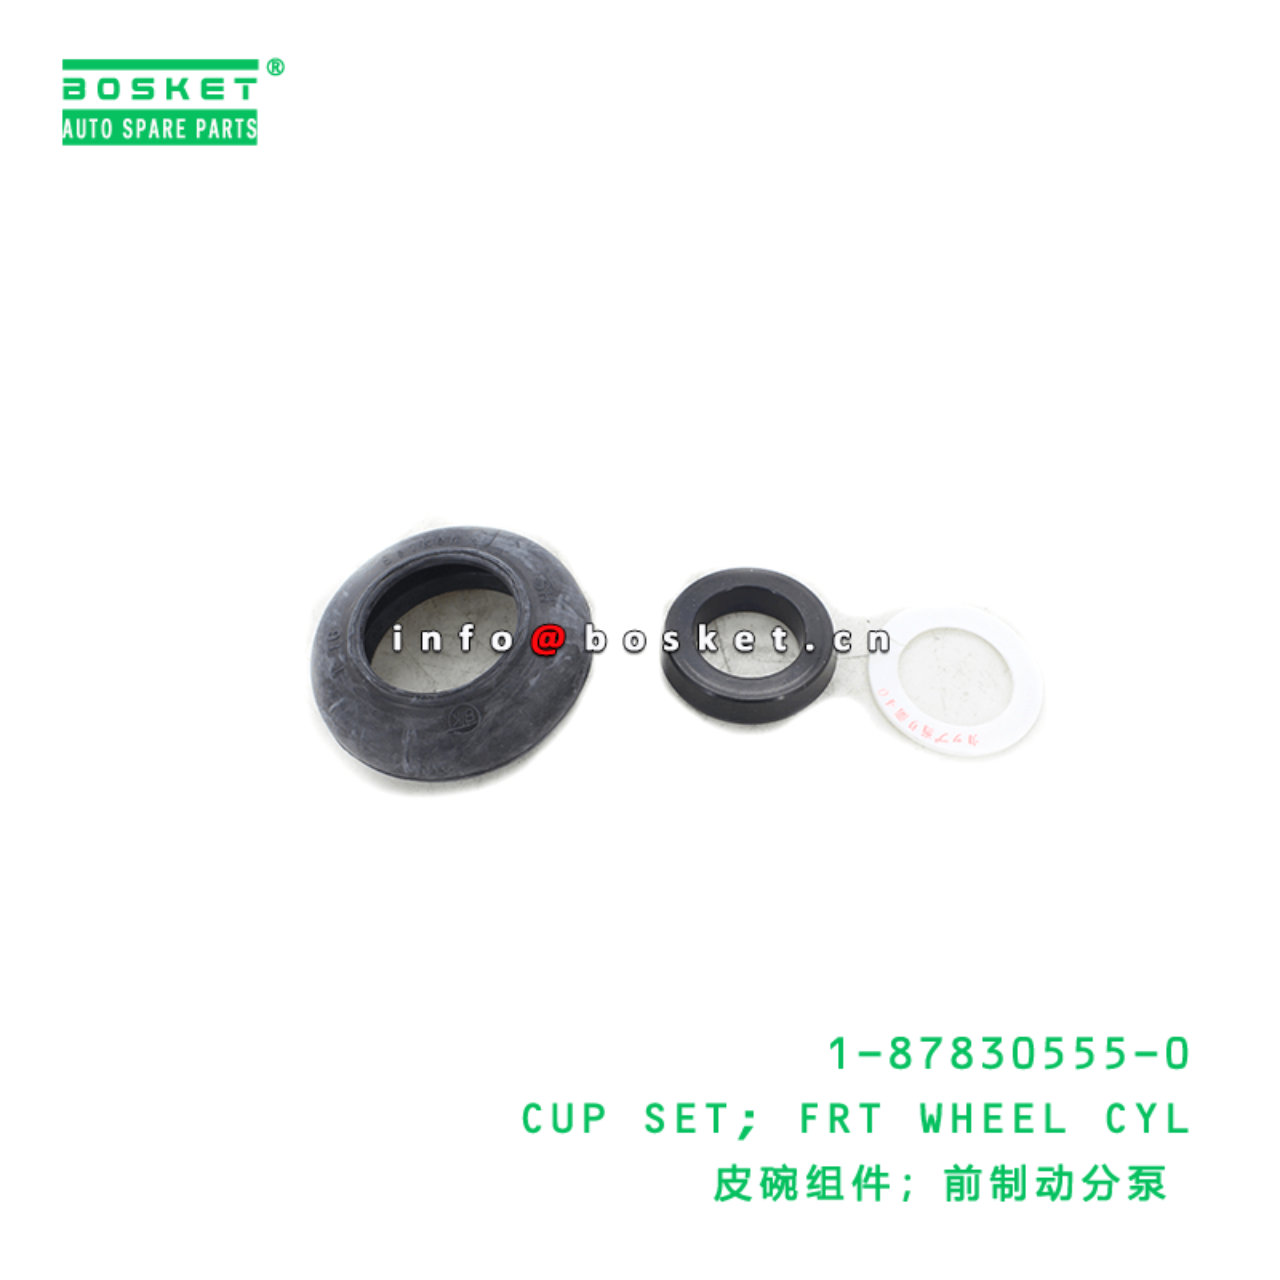  1-87830555-0 Front Wheel Cylinder Cup Set 1878305550 Suitable for ISUZU JCR